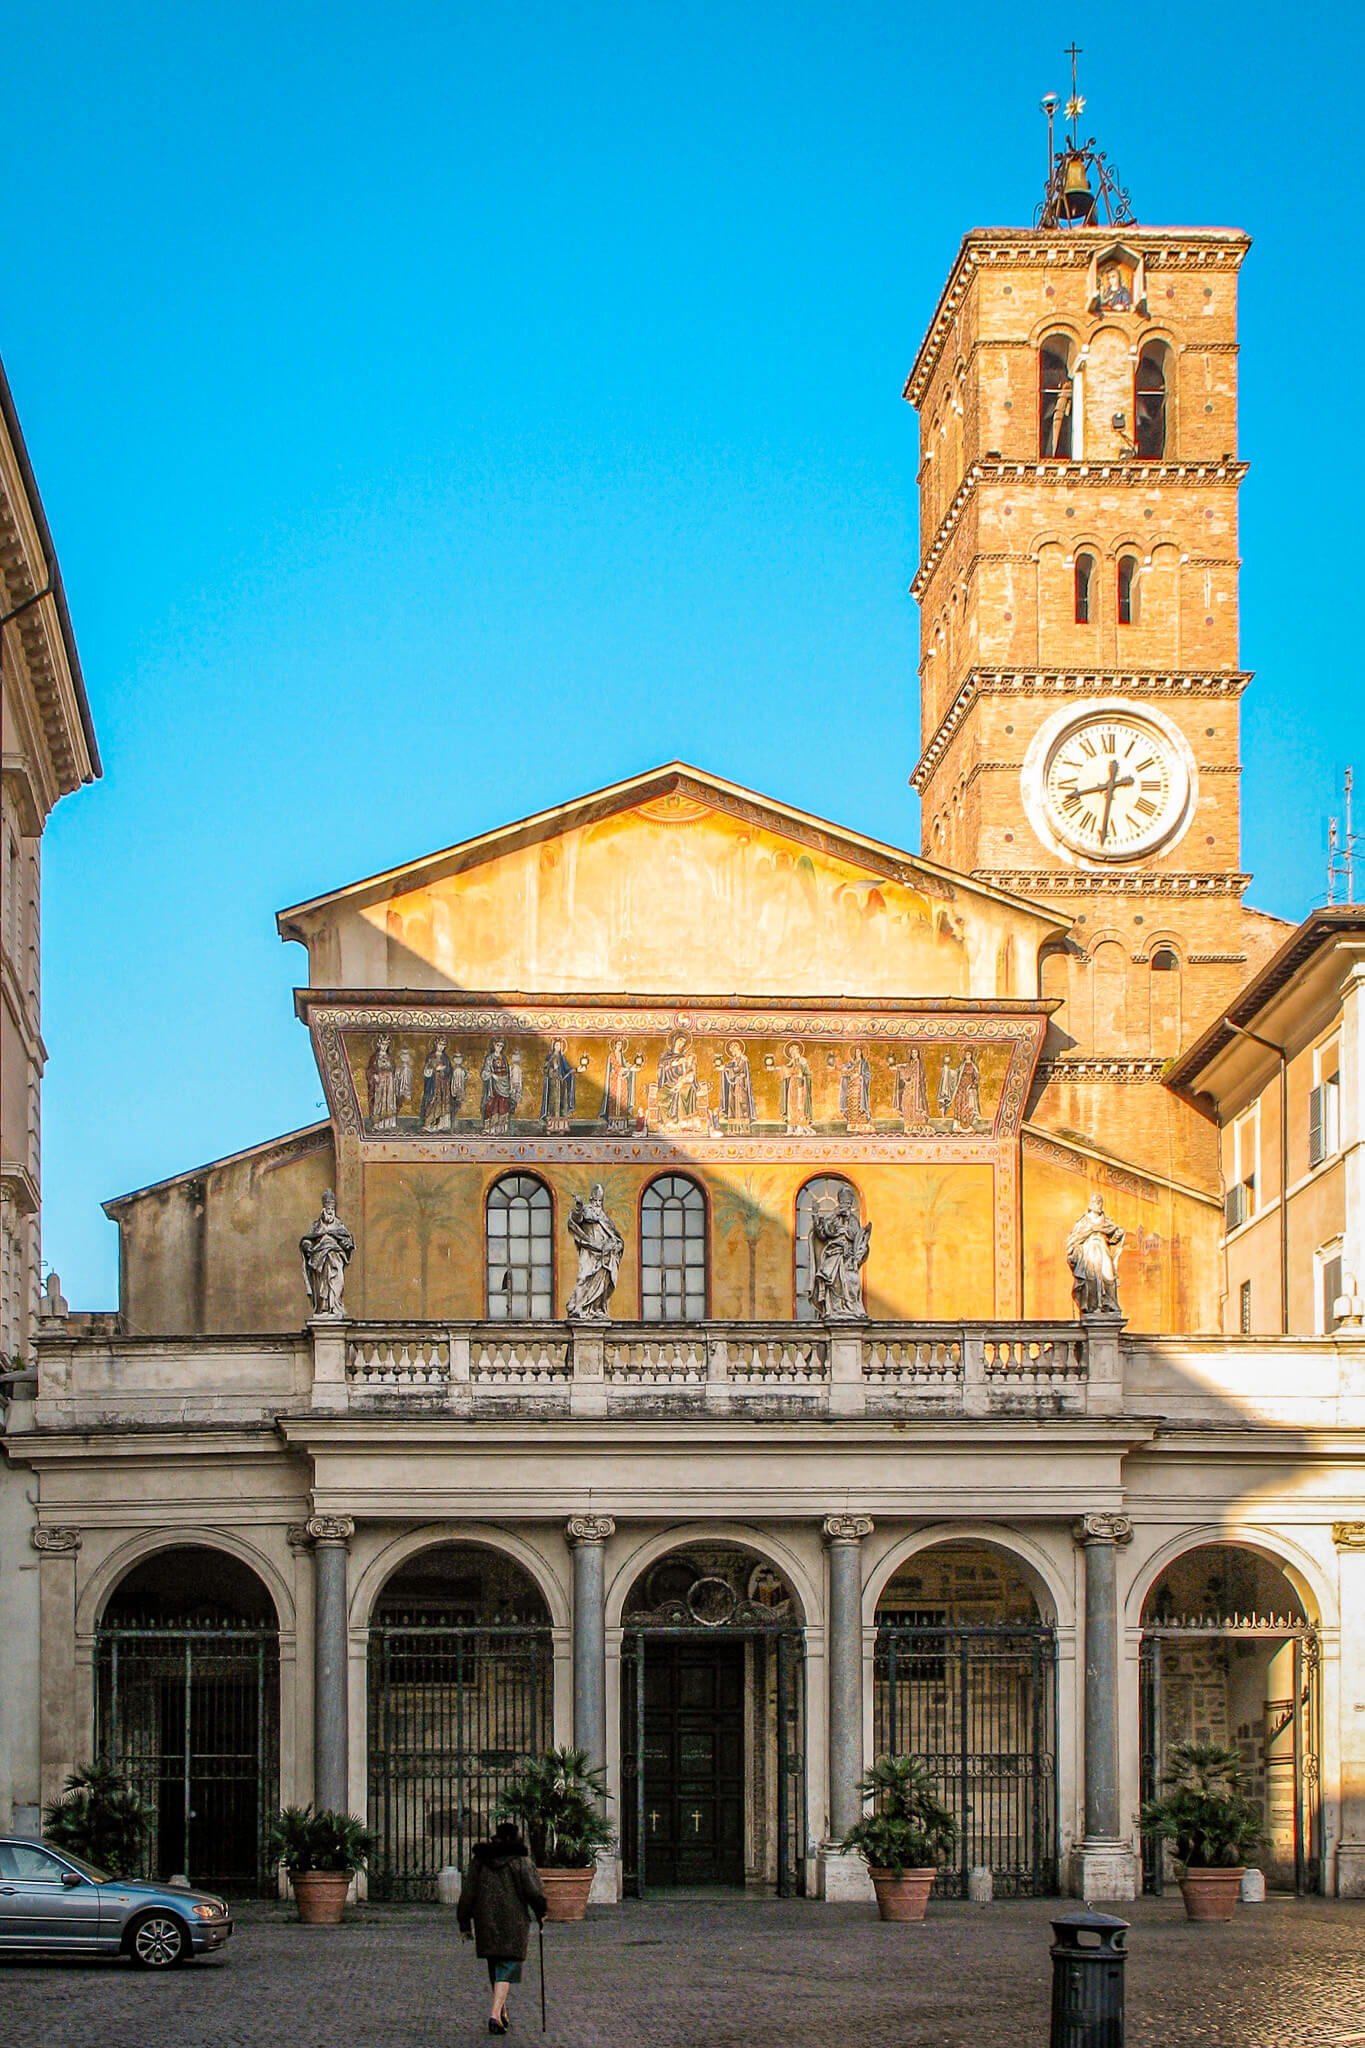 The 12th century facade of Santa Maria in Trastevere